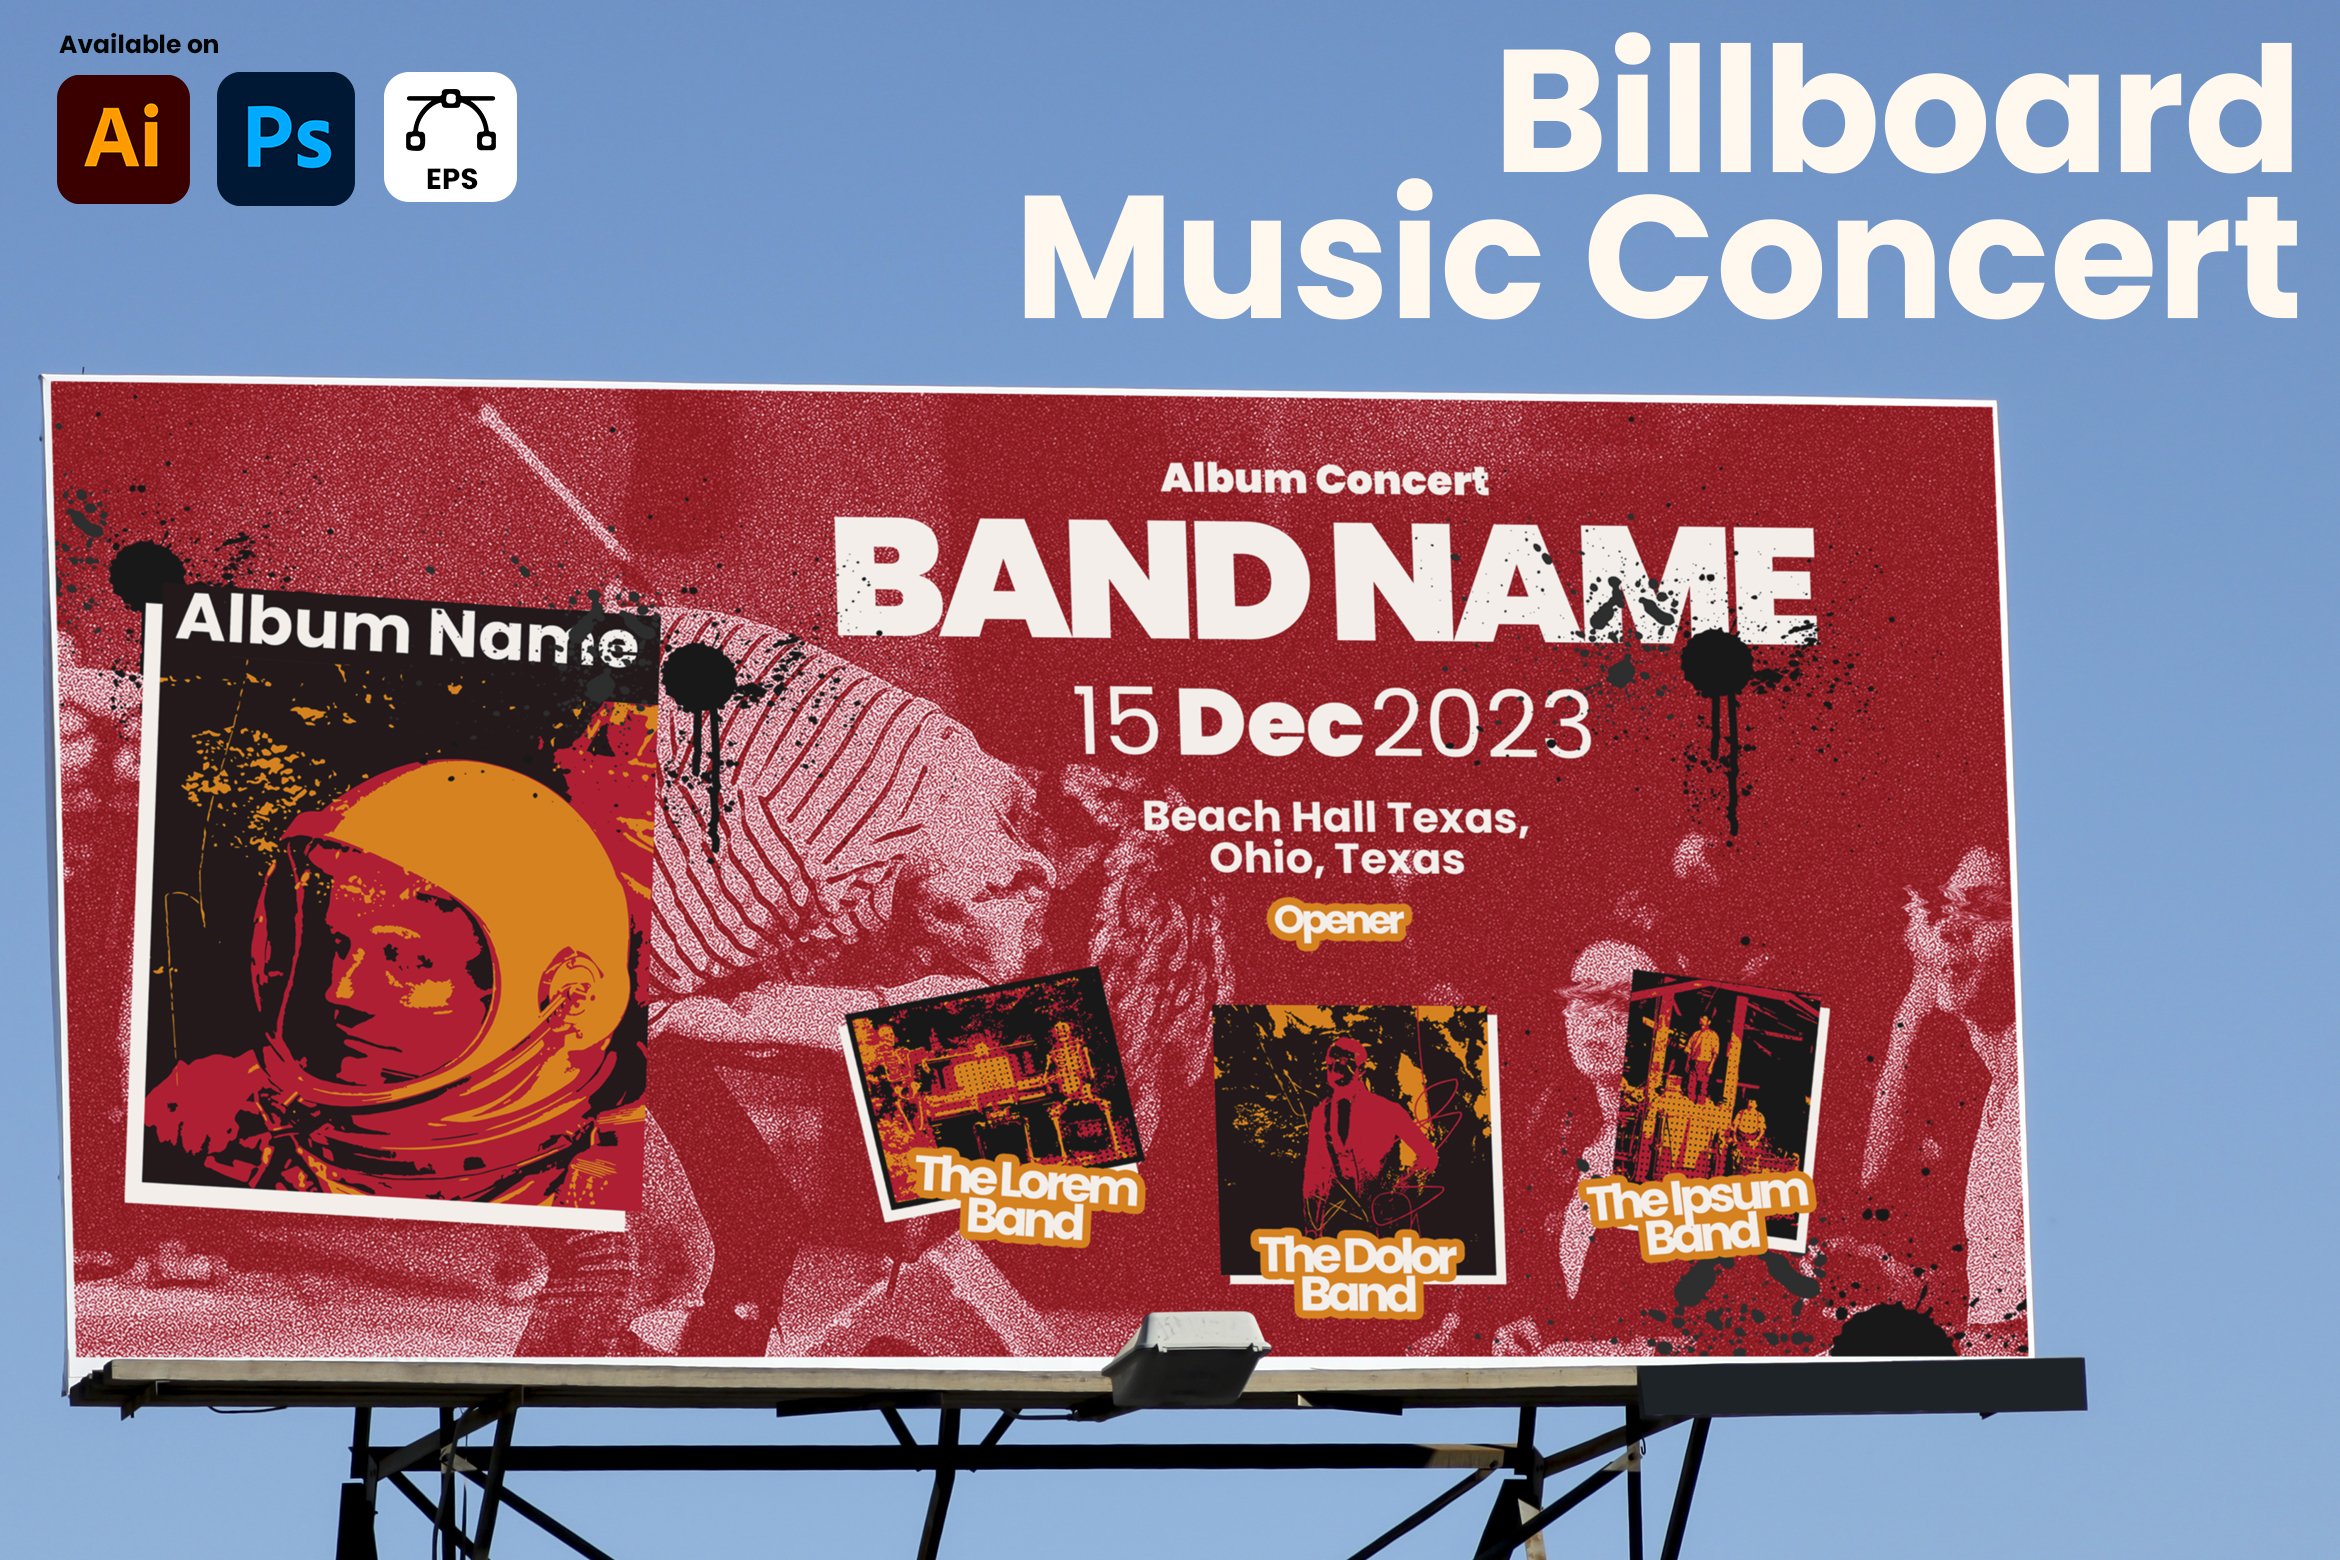 Music Concert - Billboard cover image.